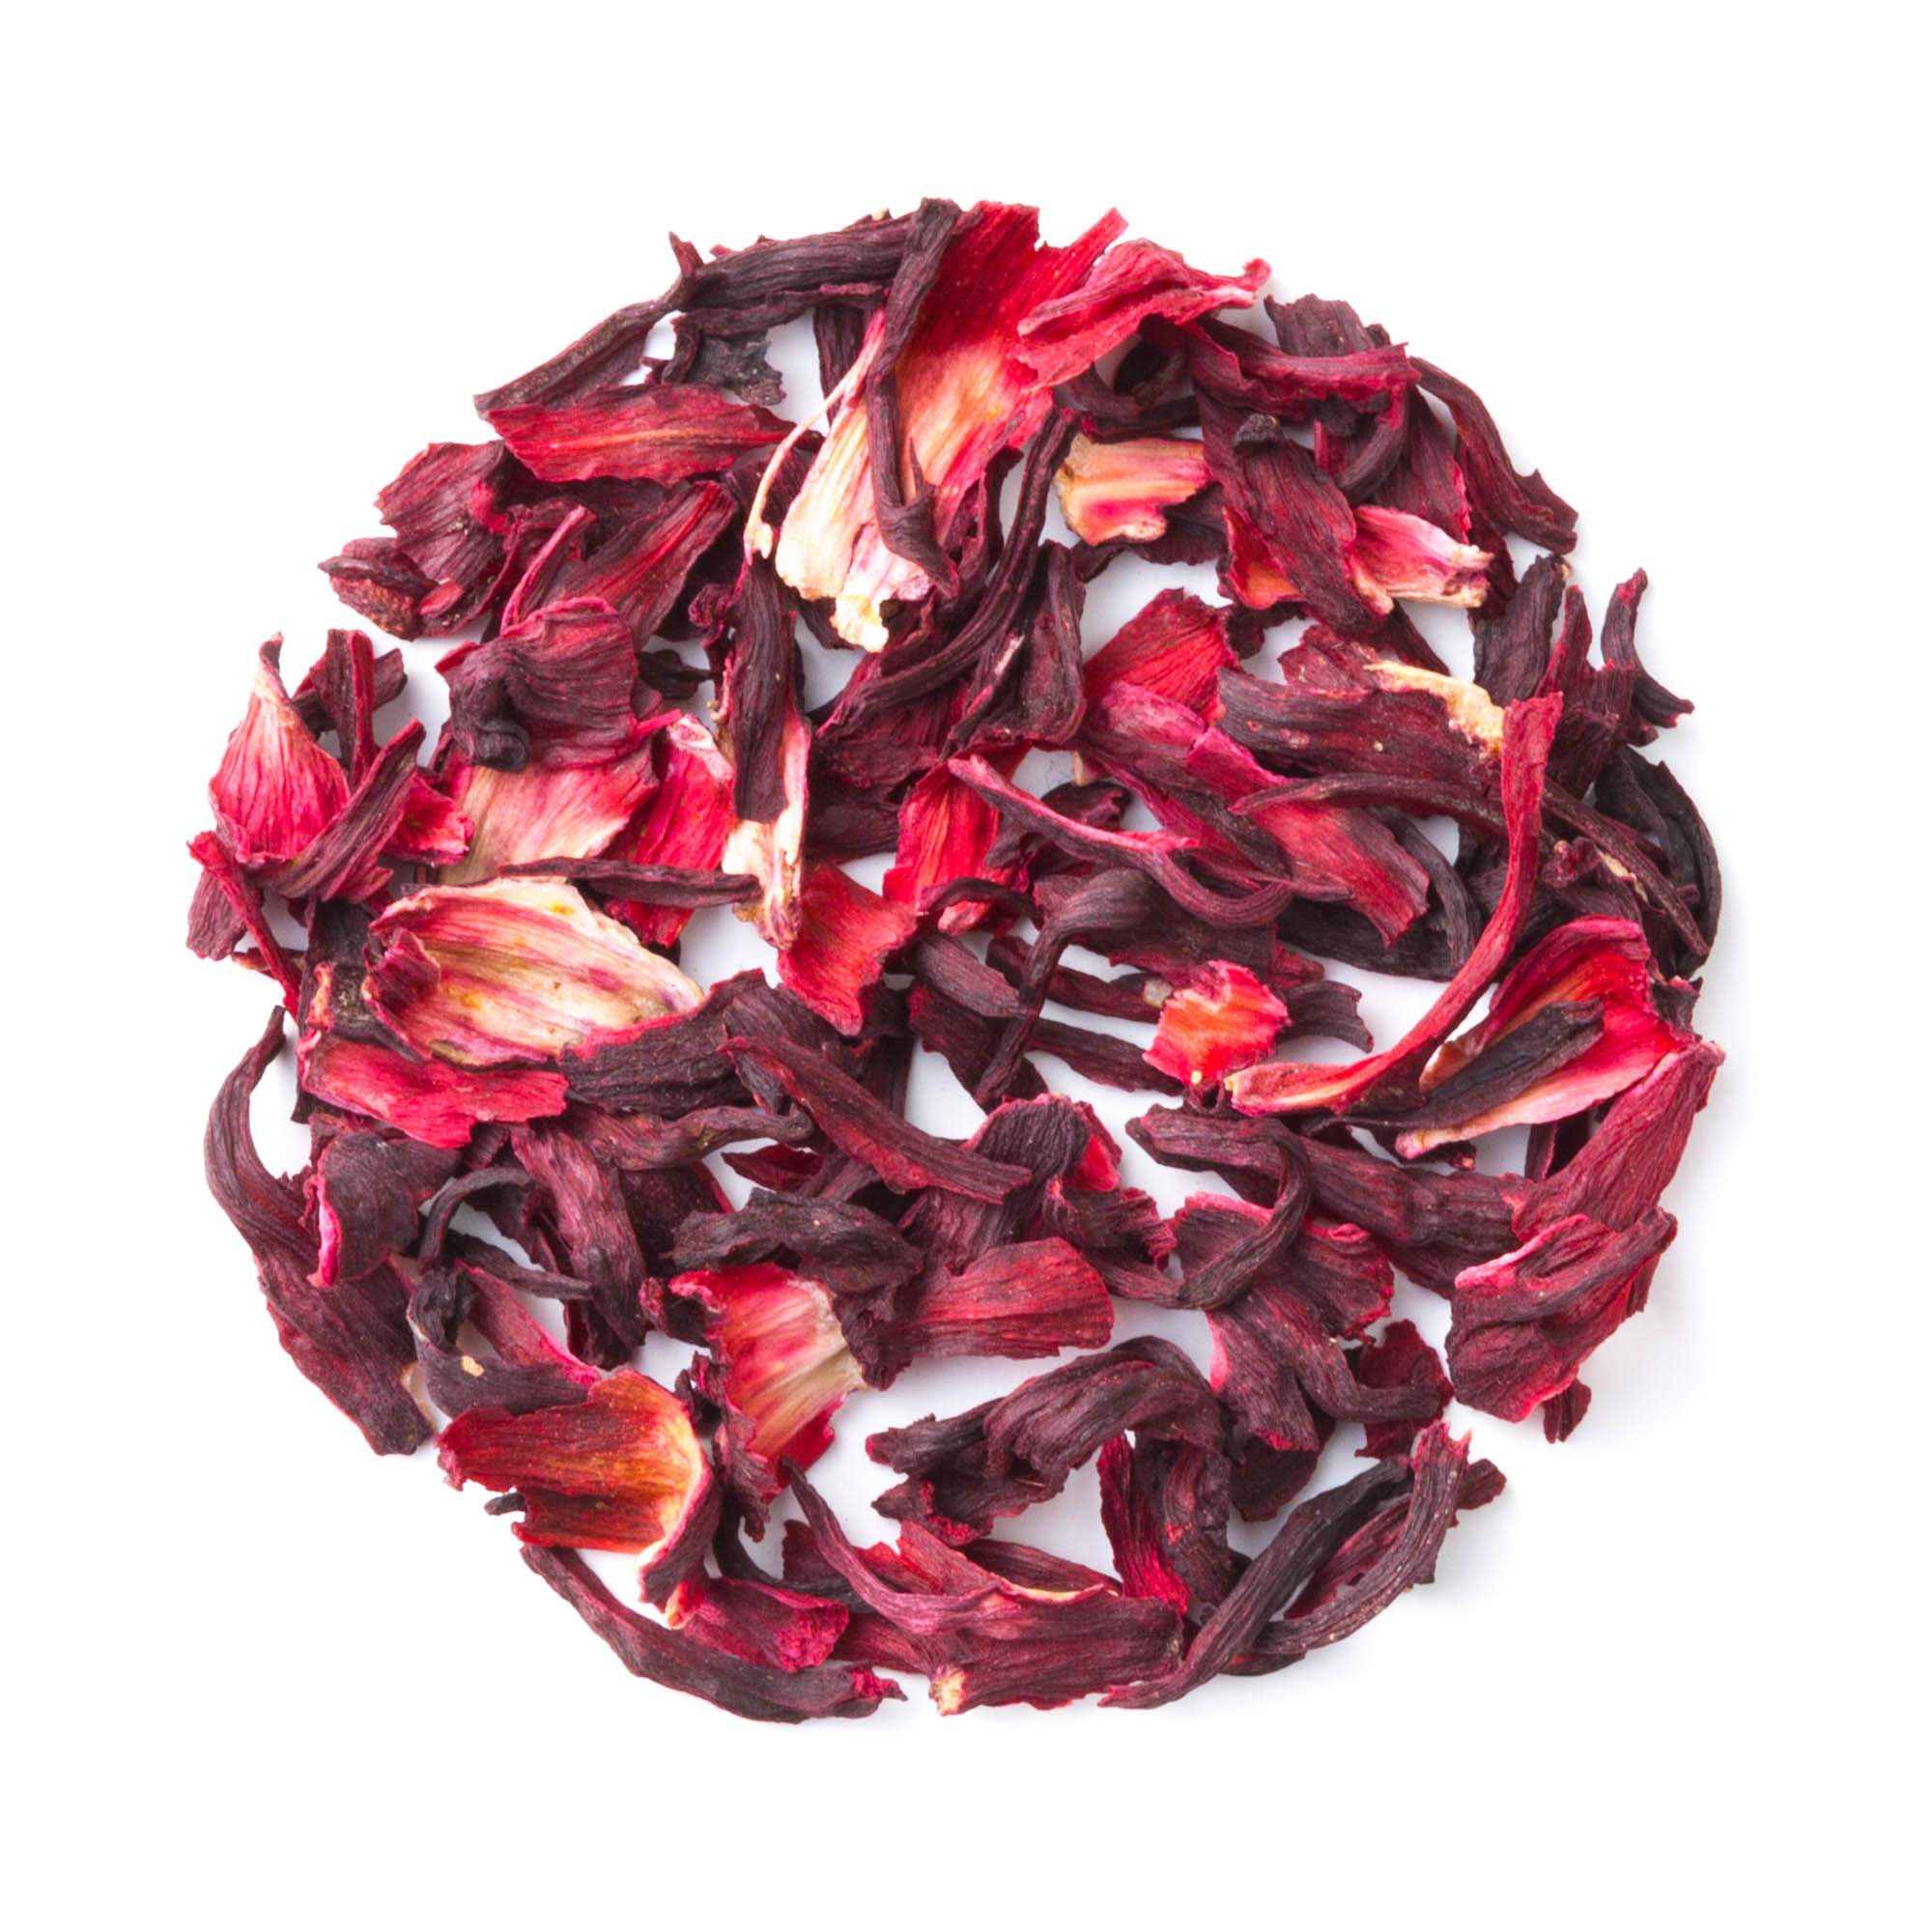 Organic Hibiscus - Loose Leaf Herbal Tisane - Naturally Caffeine Free - Antioxidant Rich - Heavenly Tea Leaves